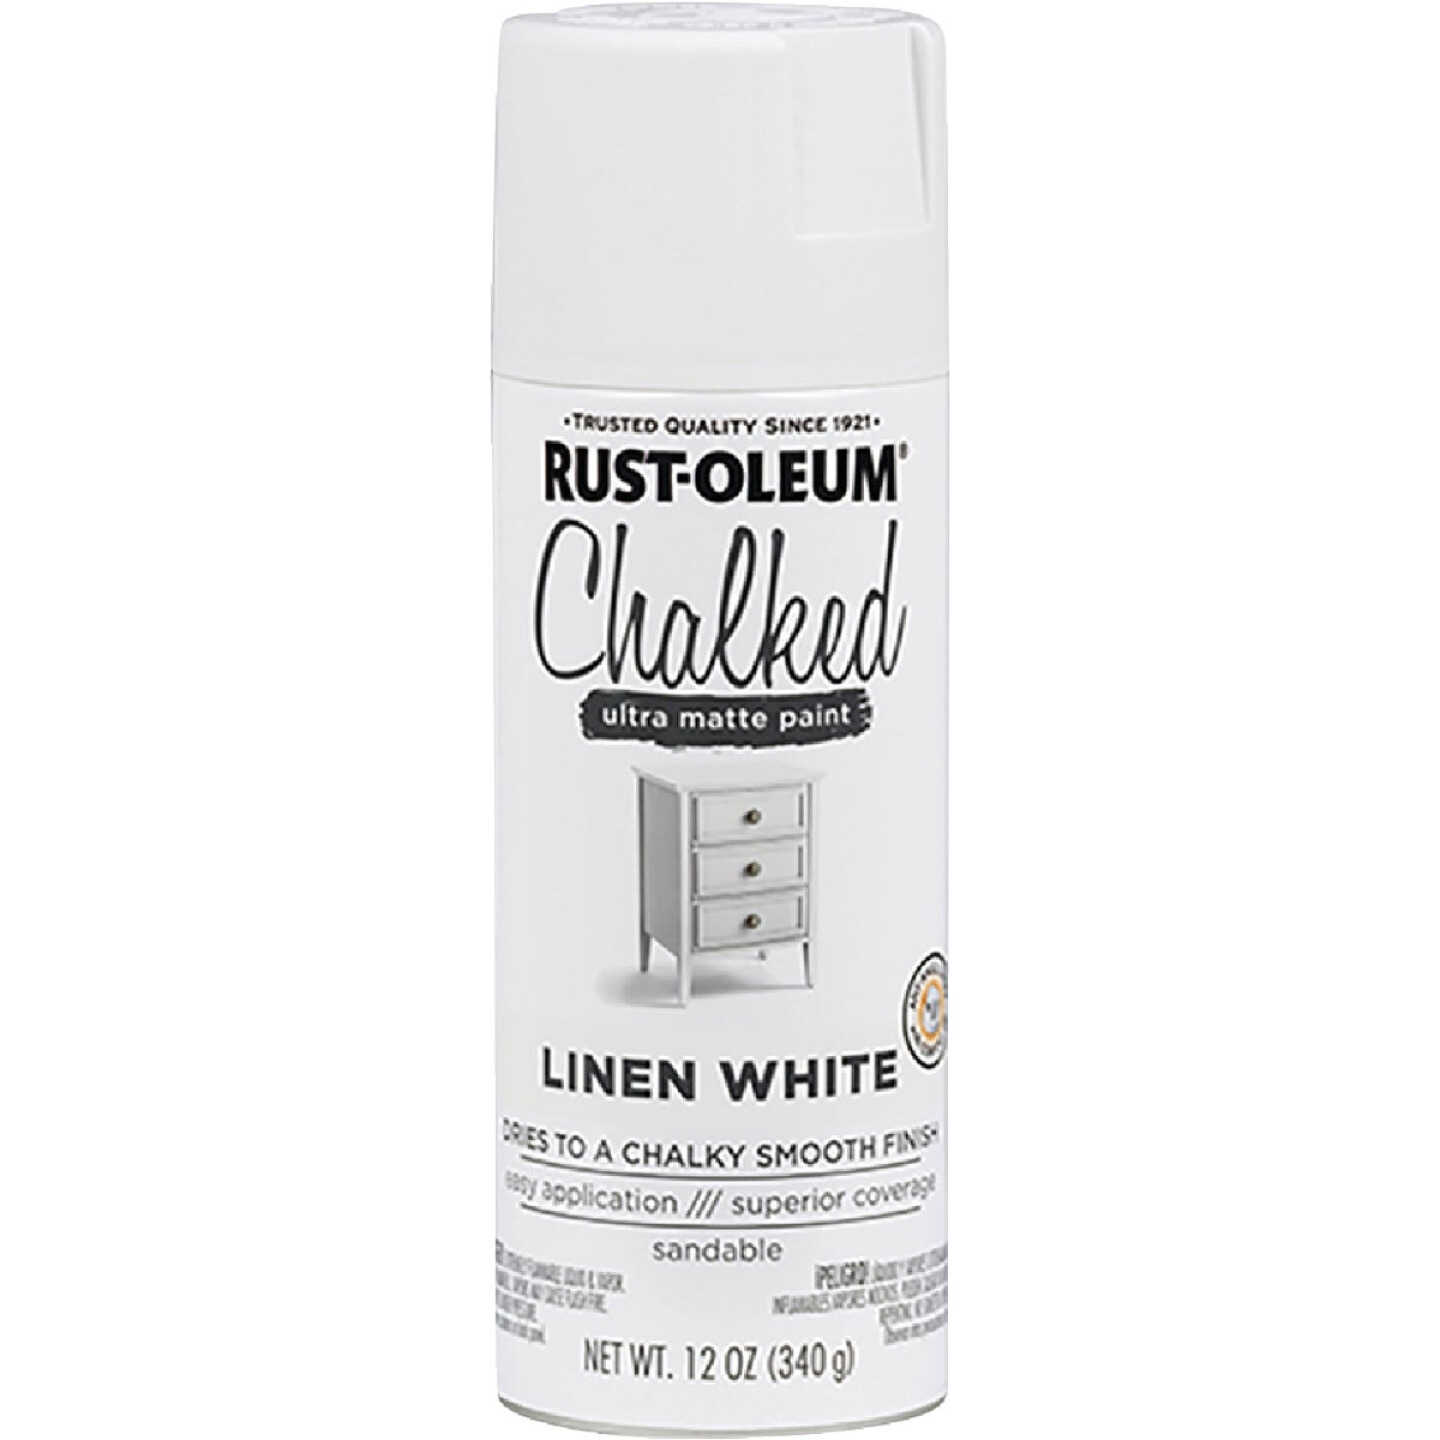 Rust-Oleum 302595 Chalk Spray Paint, Ultra Matte, Serenit